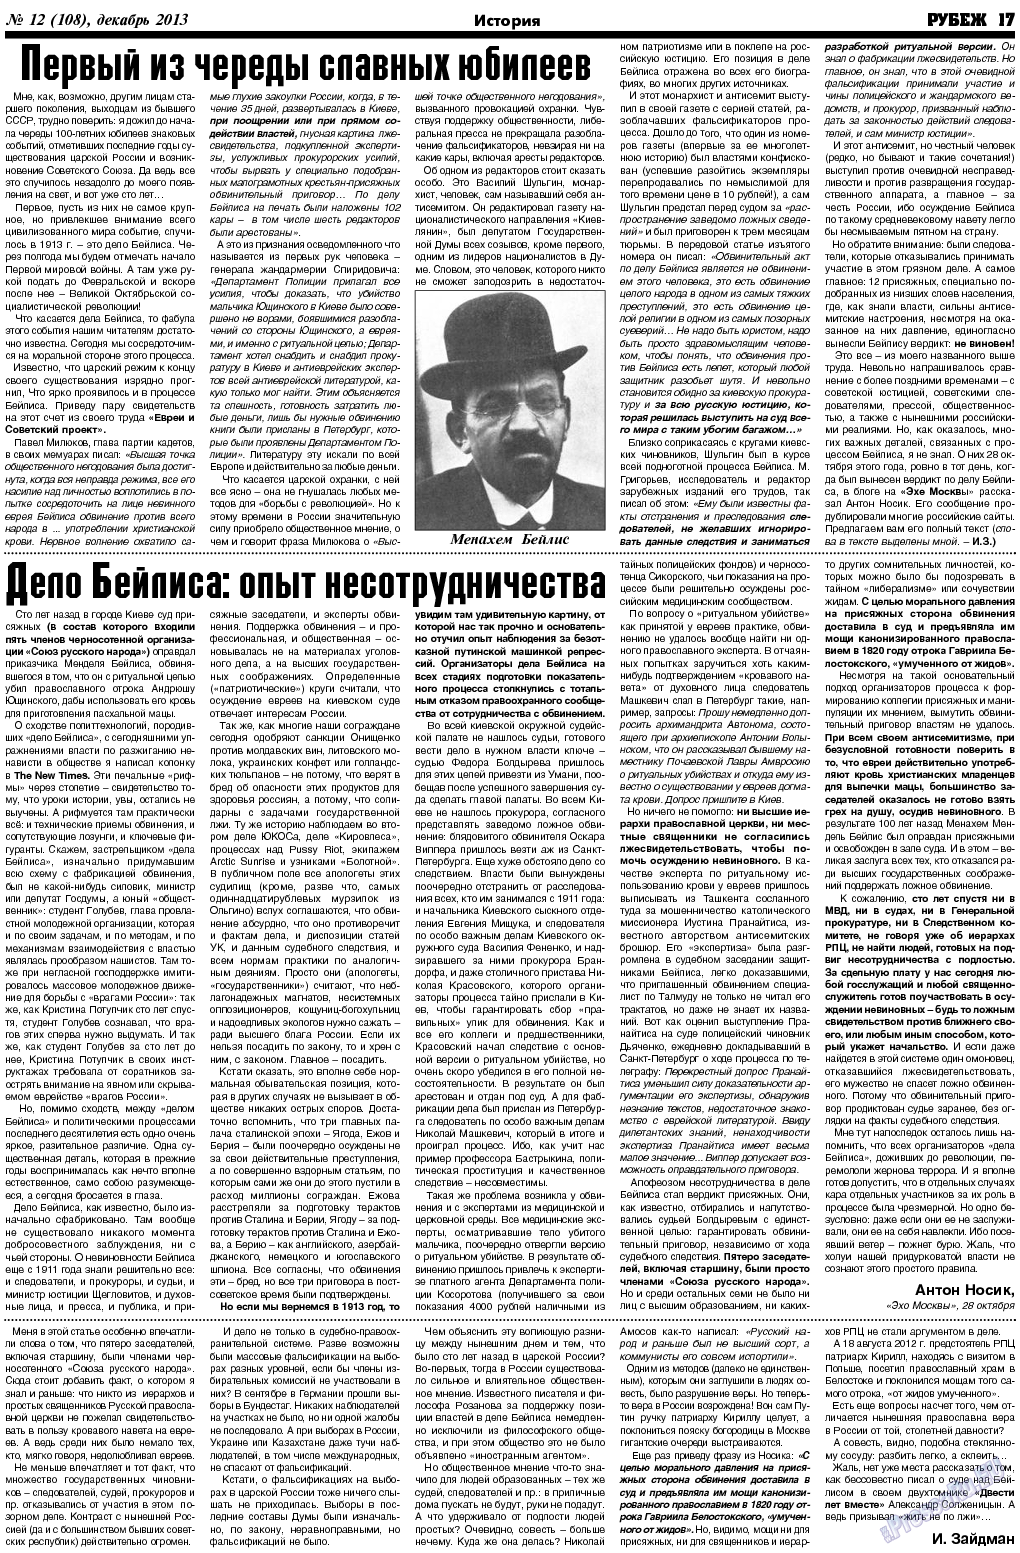 Рубеж, газета. 2013 №12 стр.17